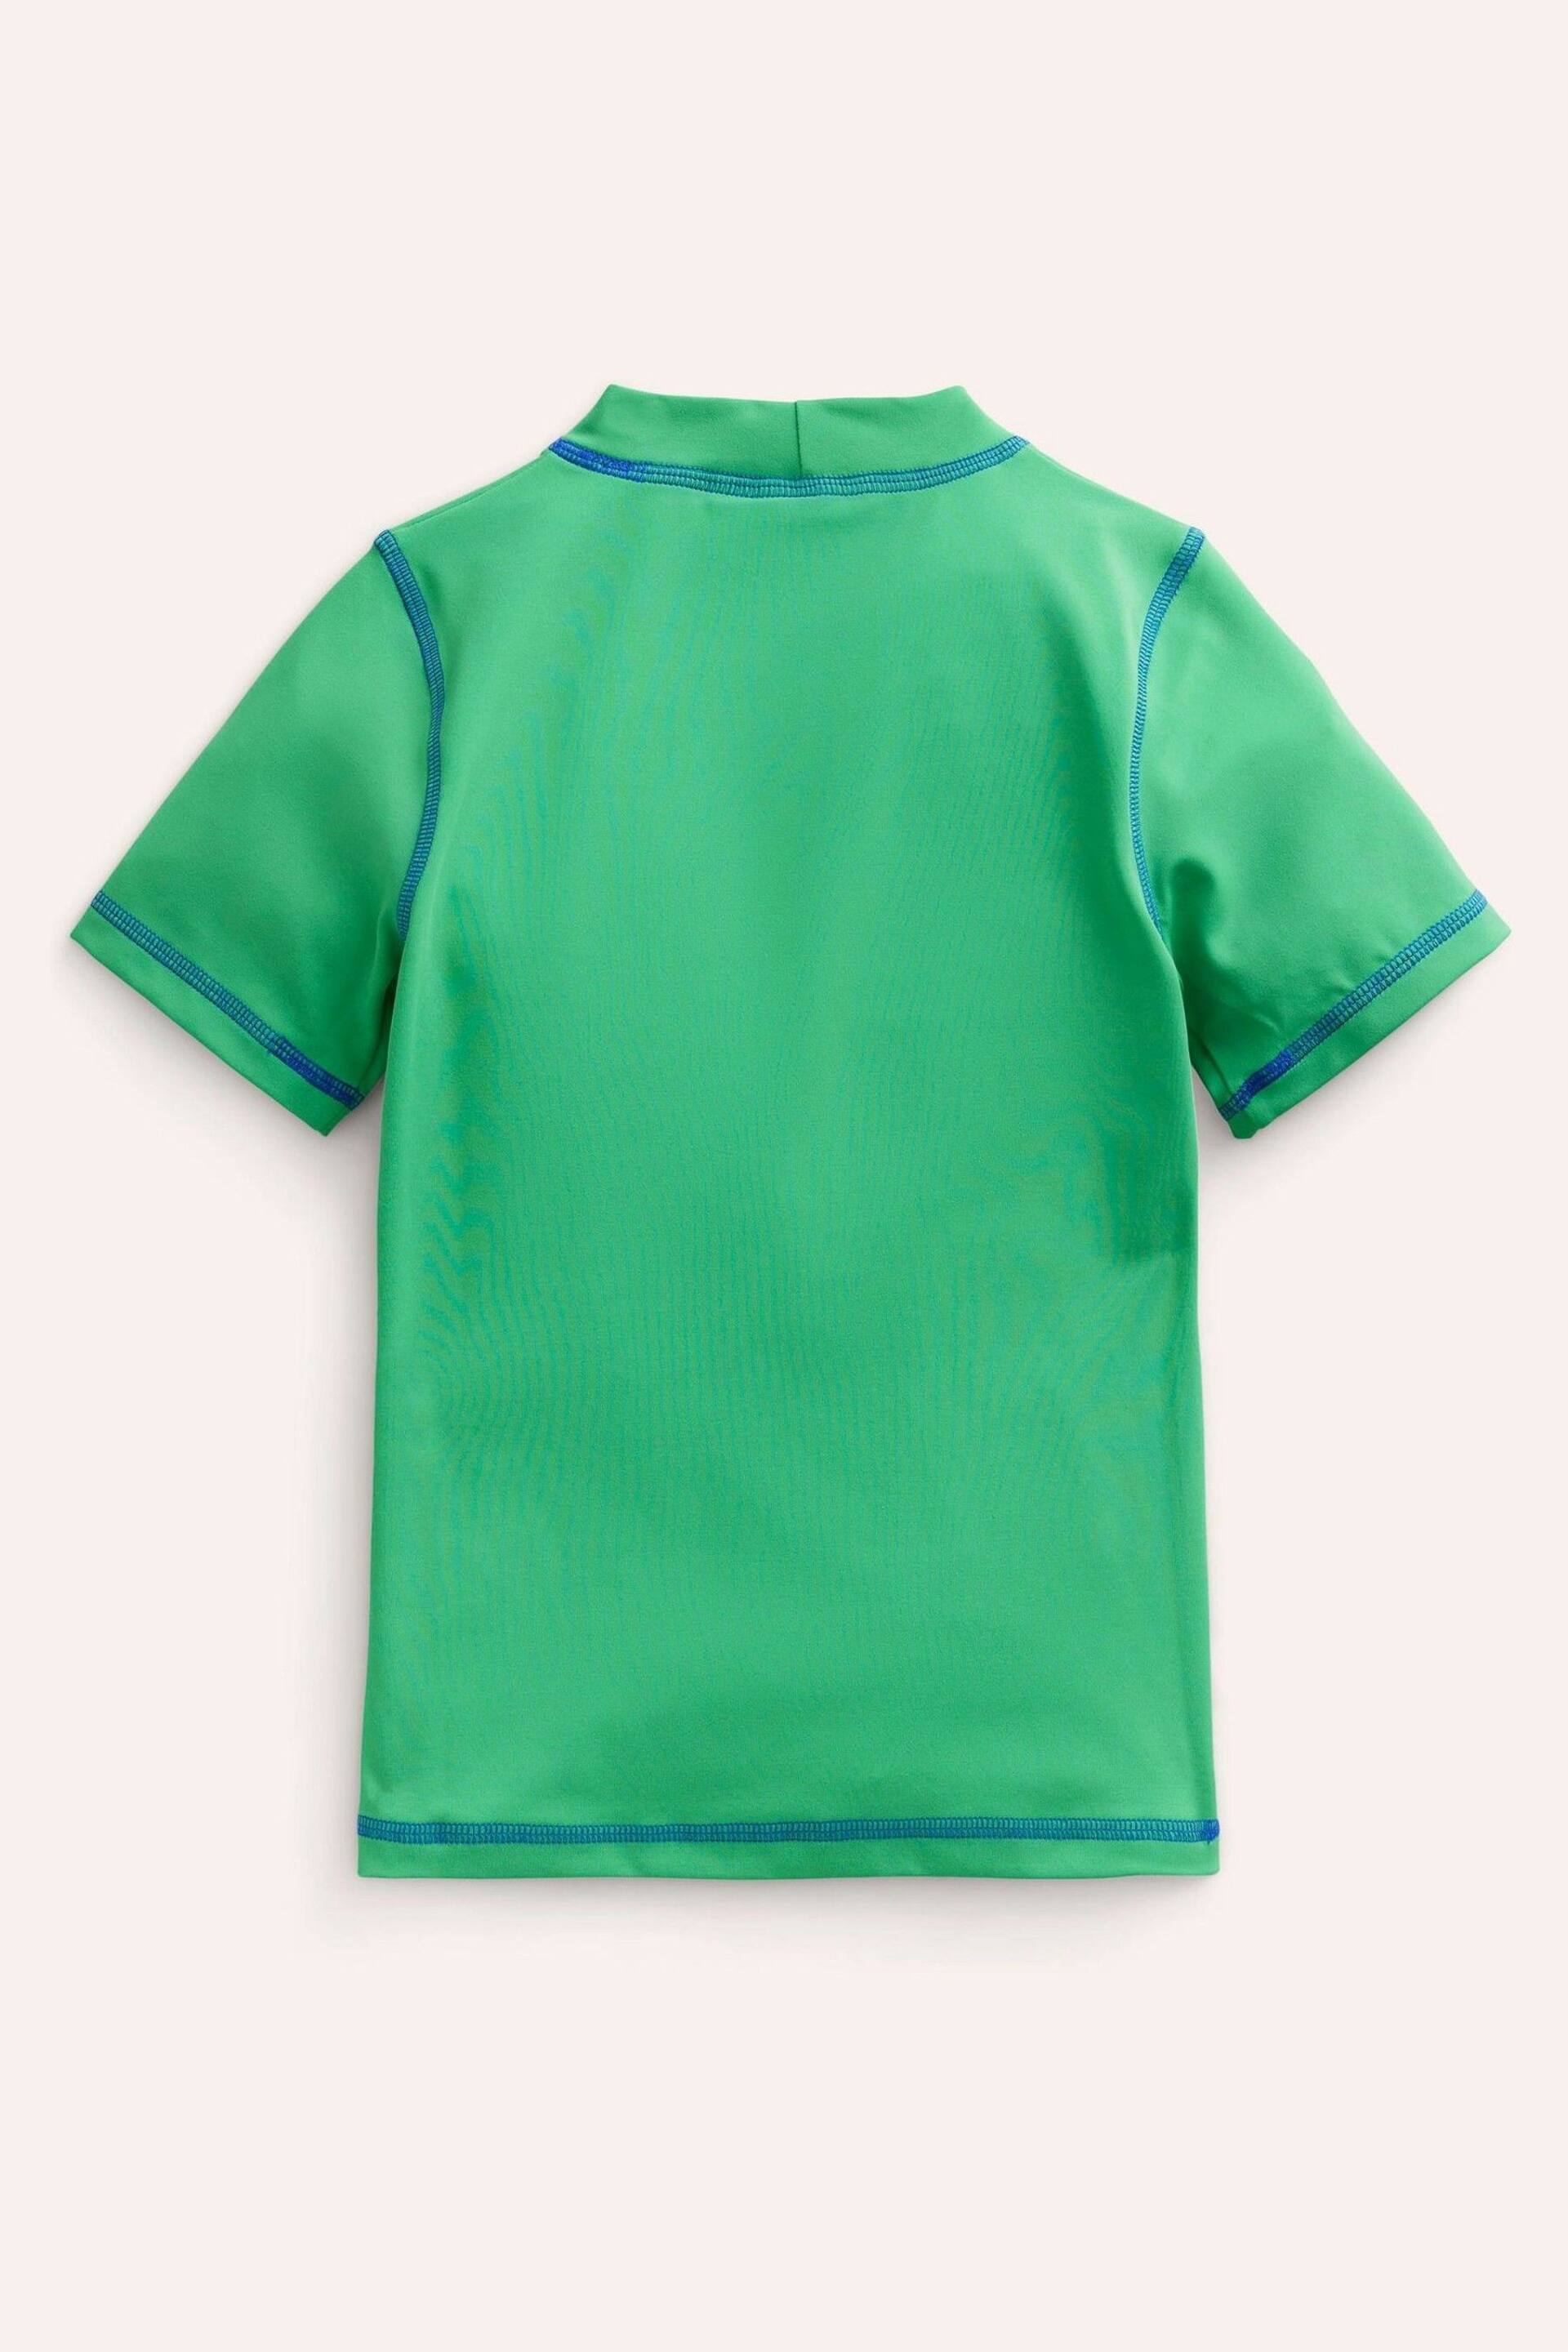 Boden Green Short Sleeve Rash Vest - Image 2 of 3